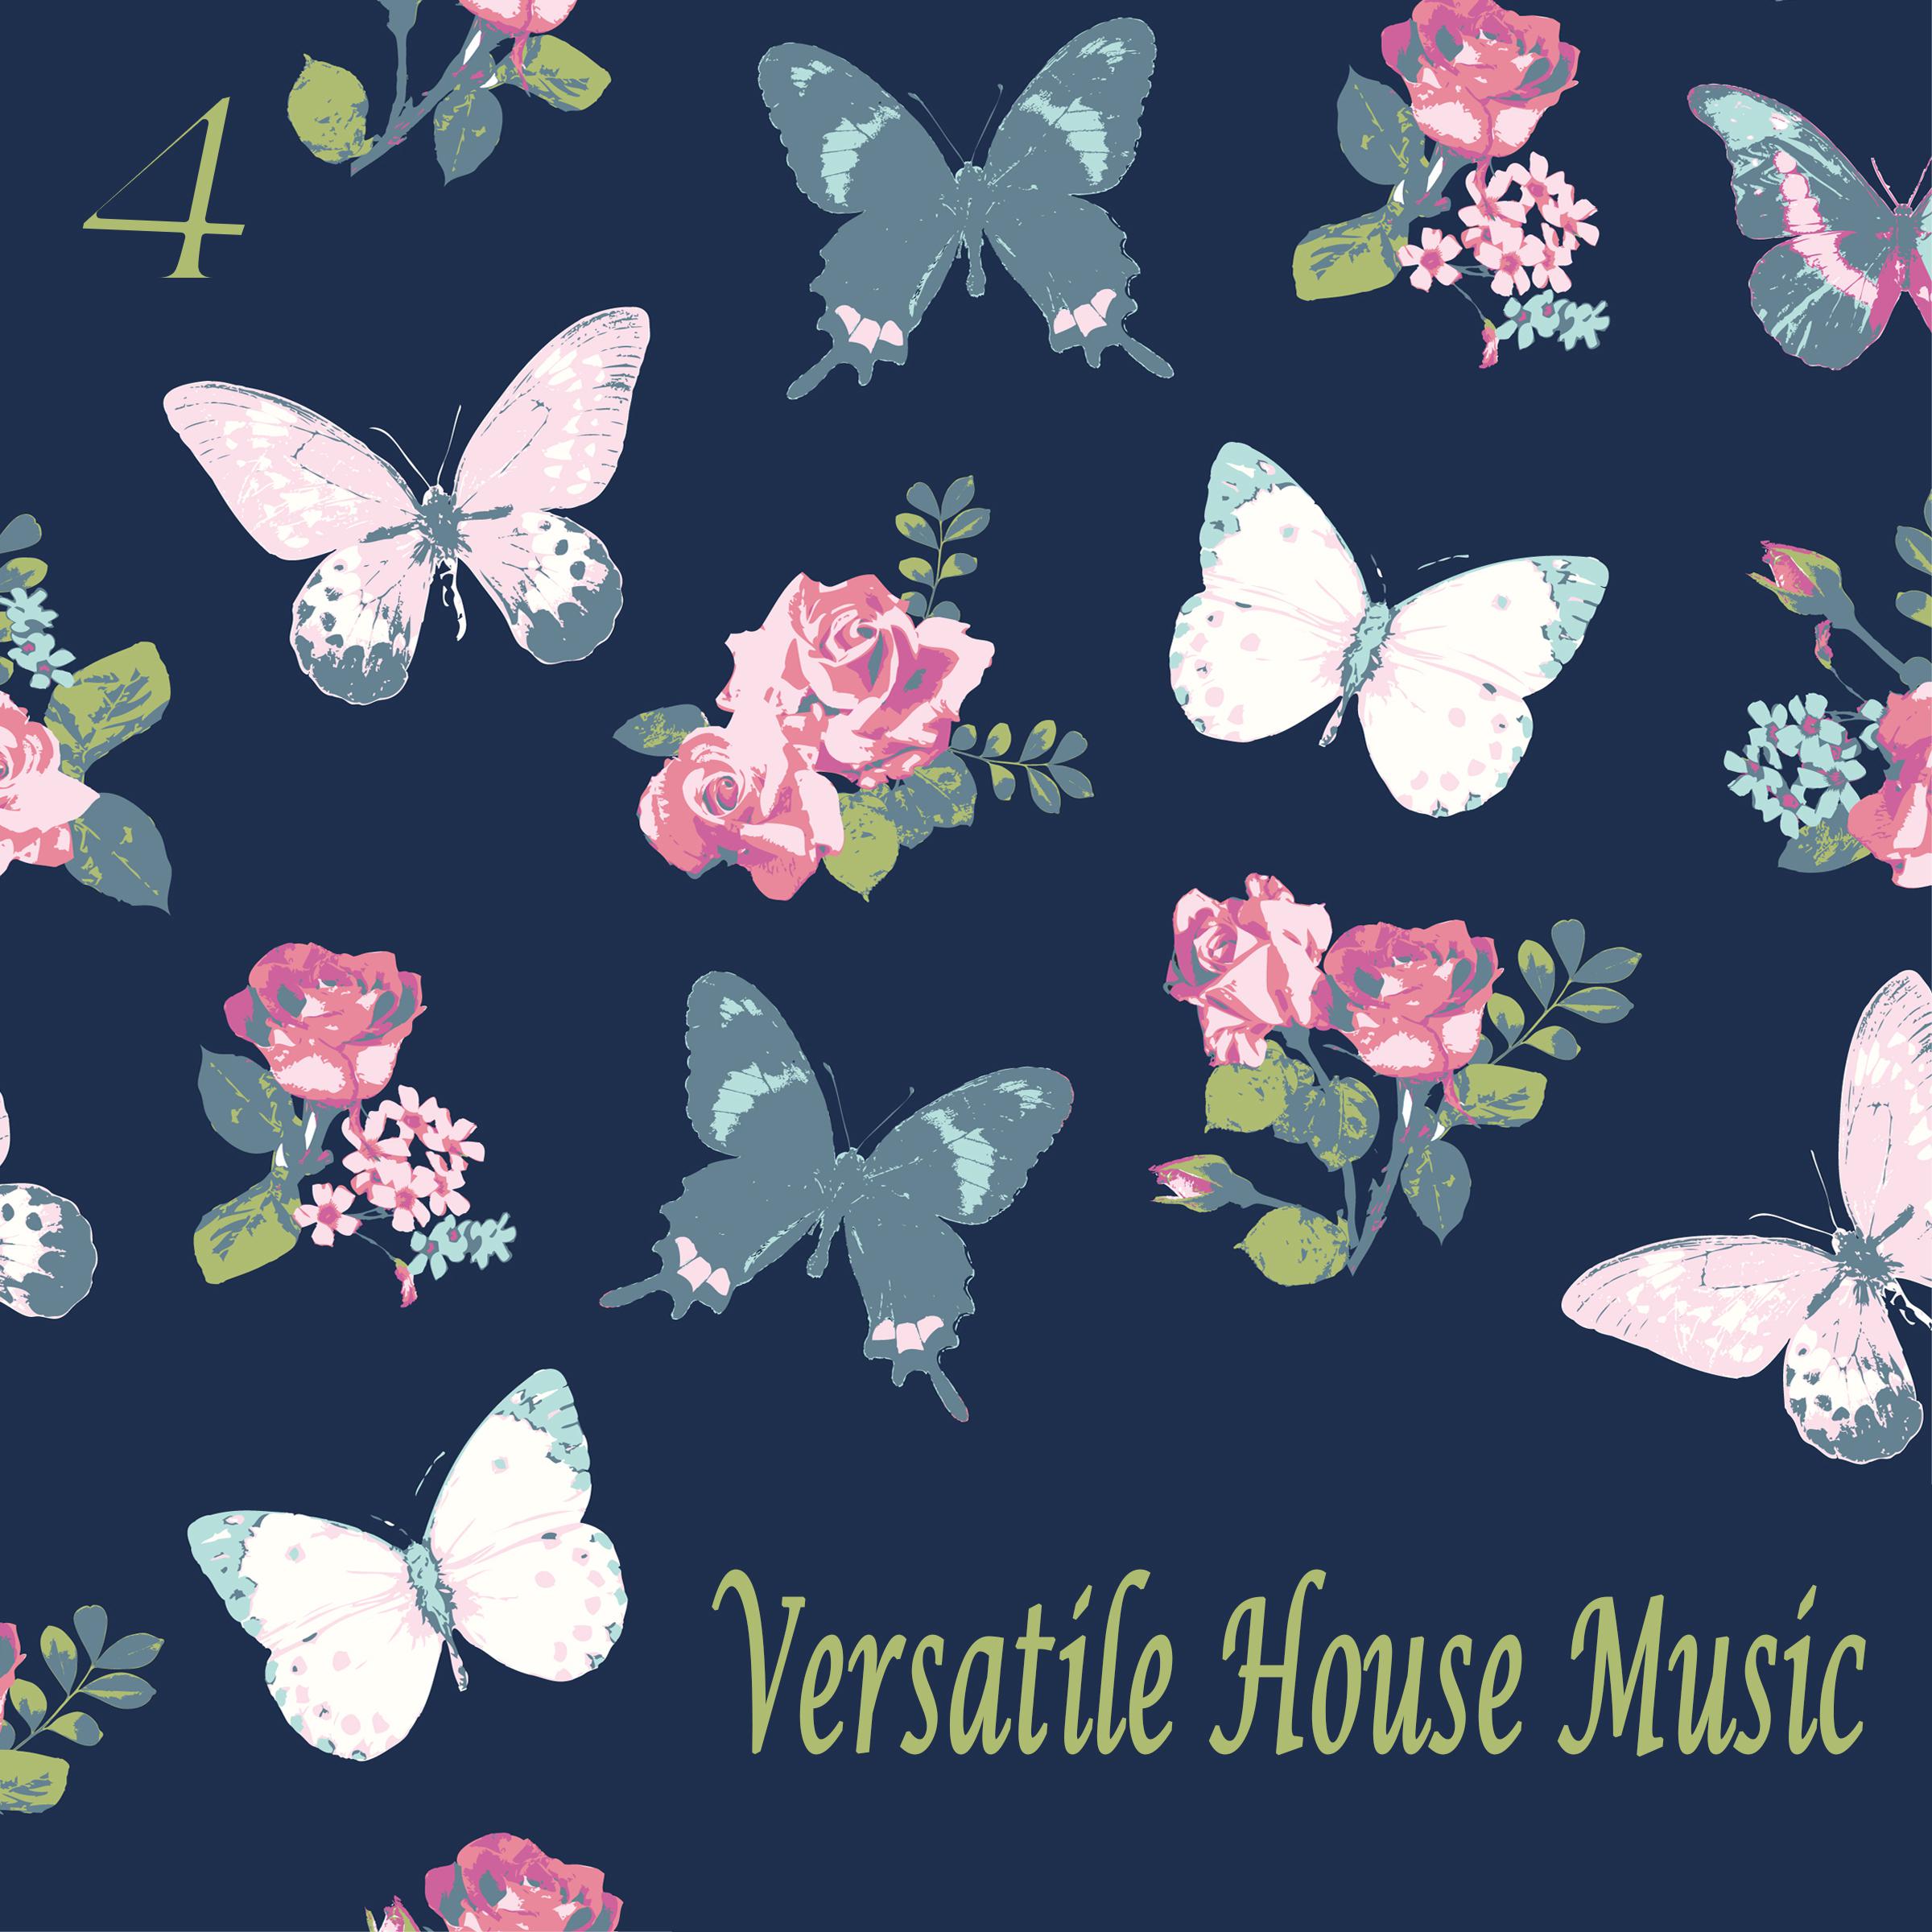 Versatile House Music, Vol. 4